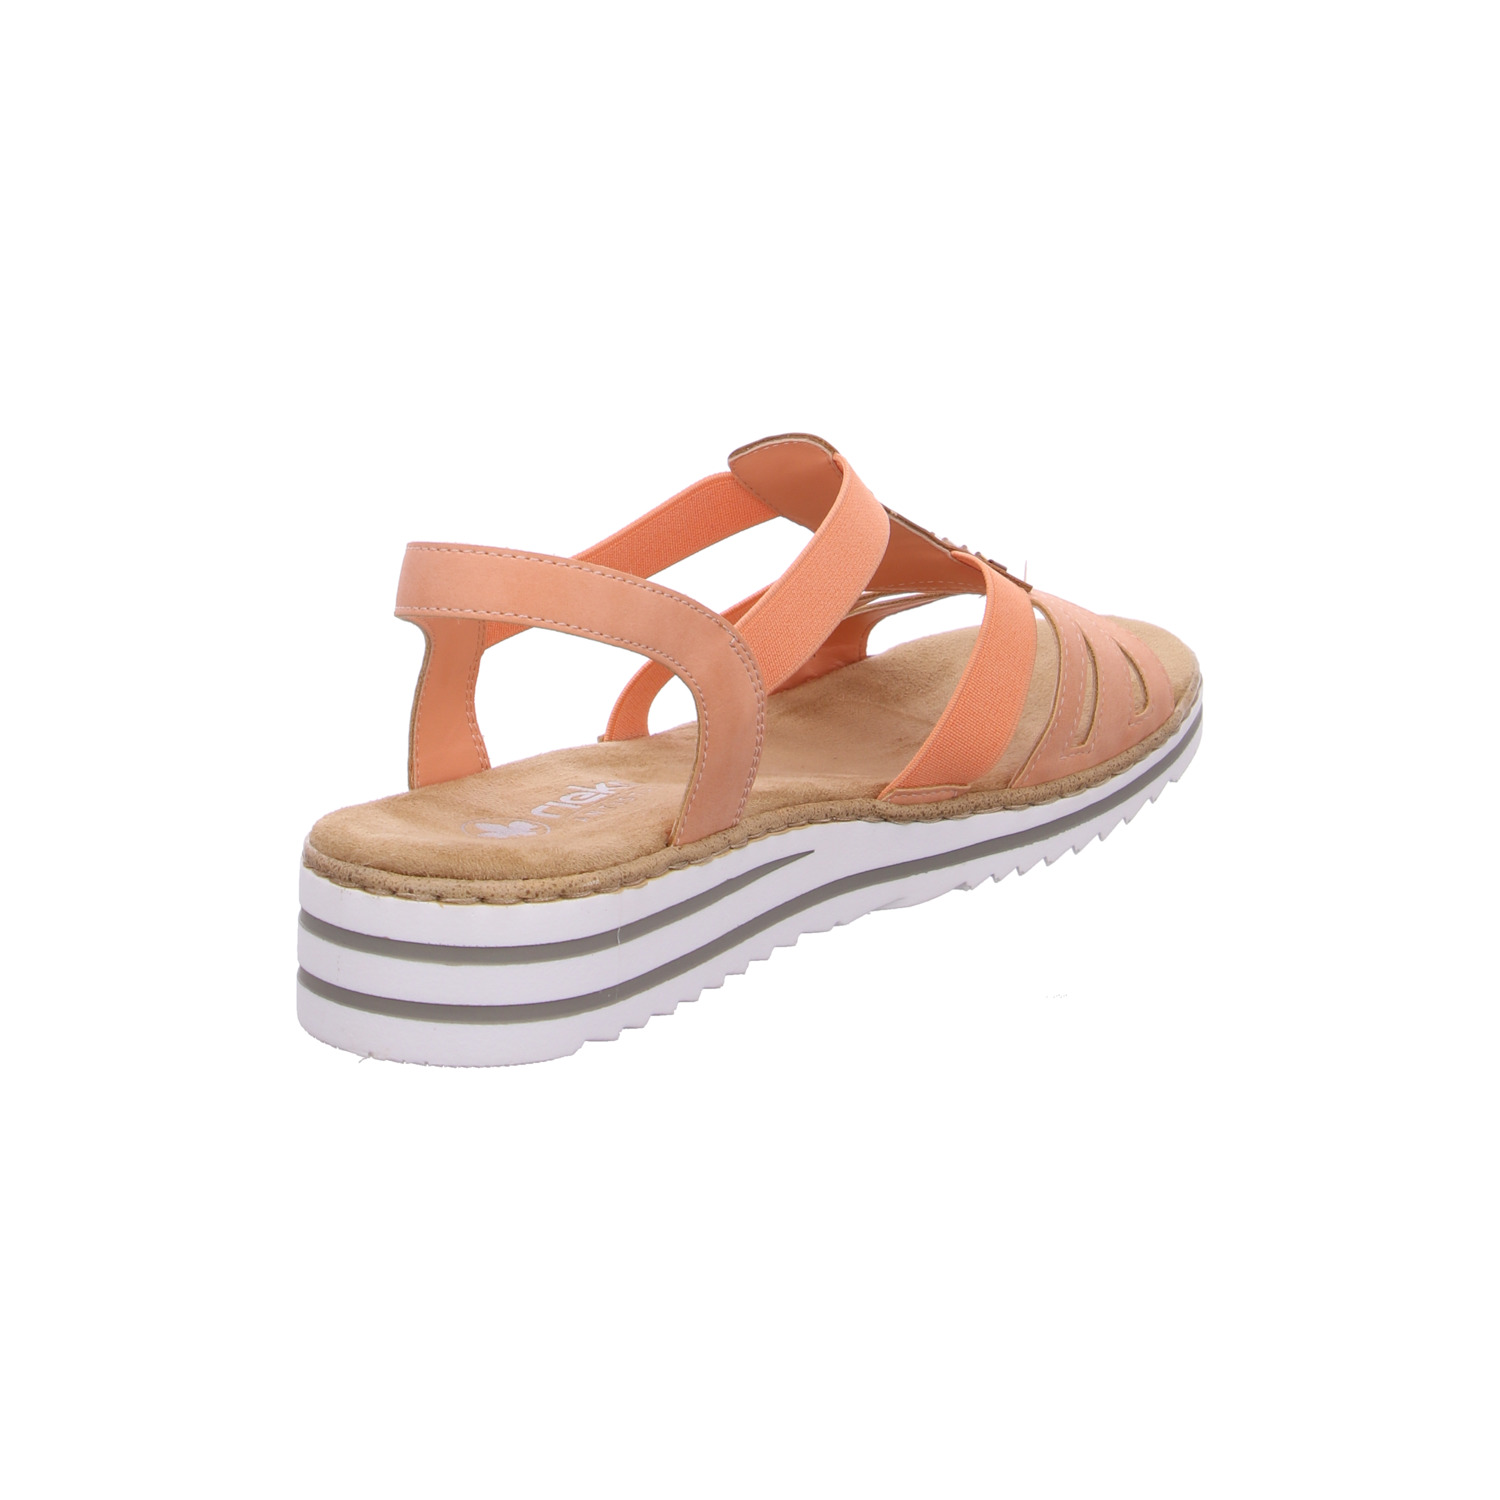 rieker-sandalette-orange_125774-36